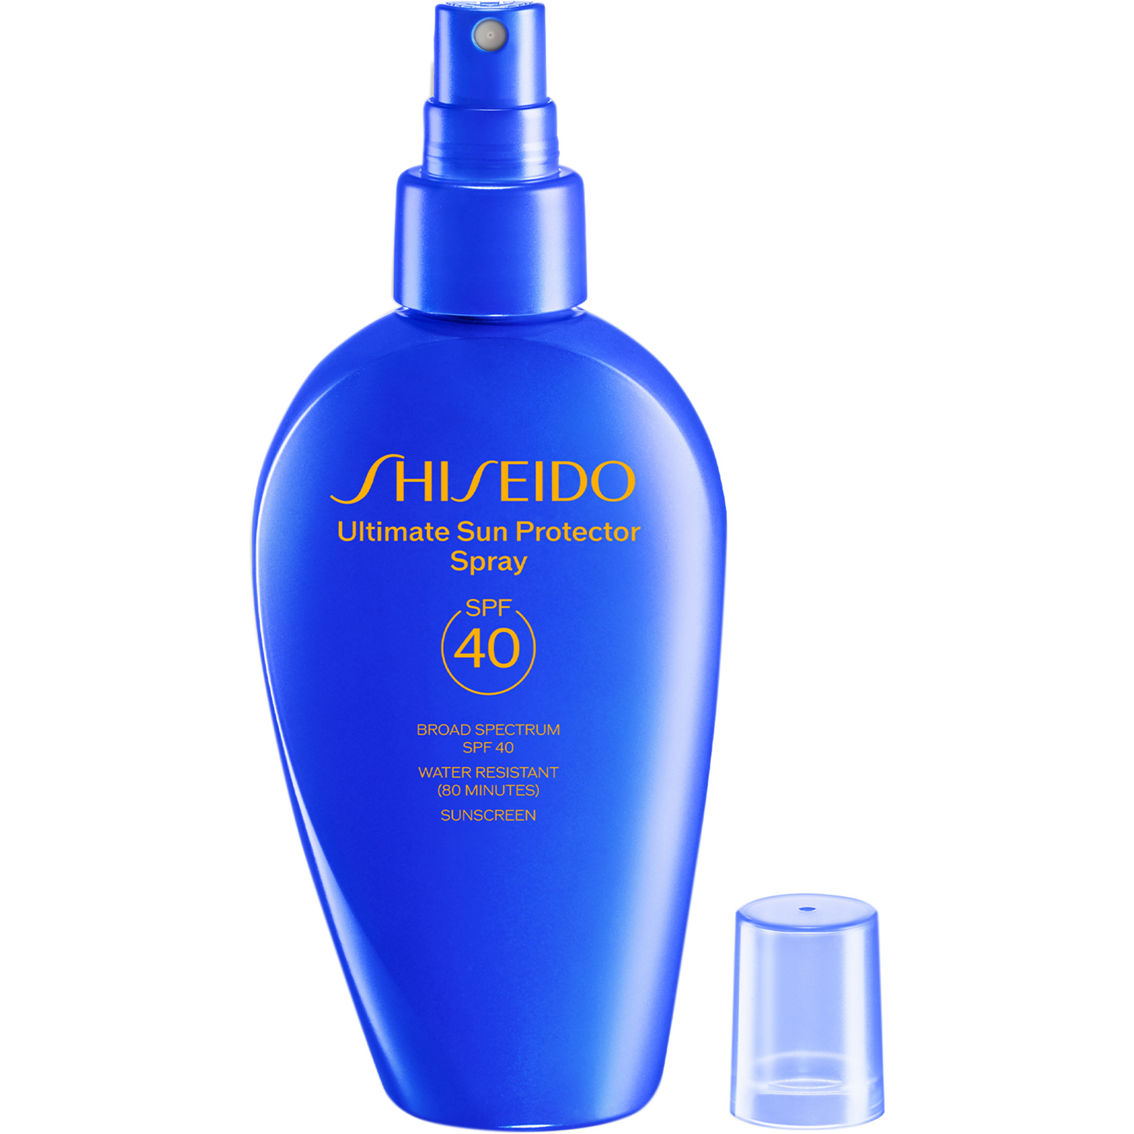 Shiseido Ultimate Sun Protector Spray SPF 40 - Image 2 of 2